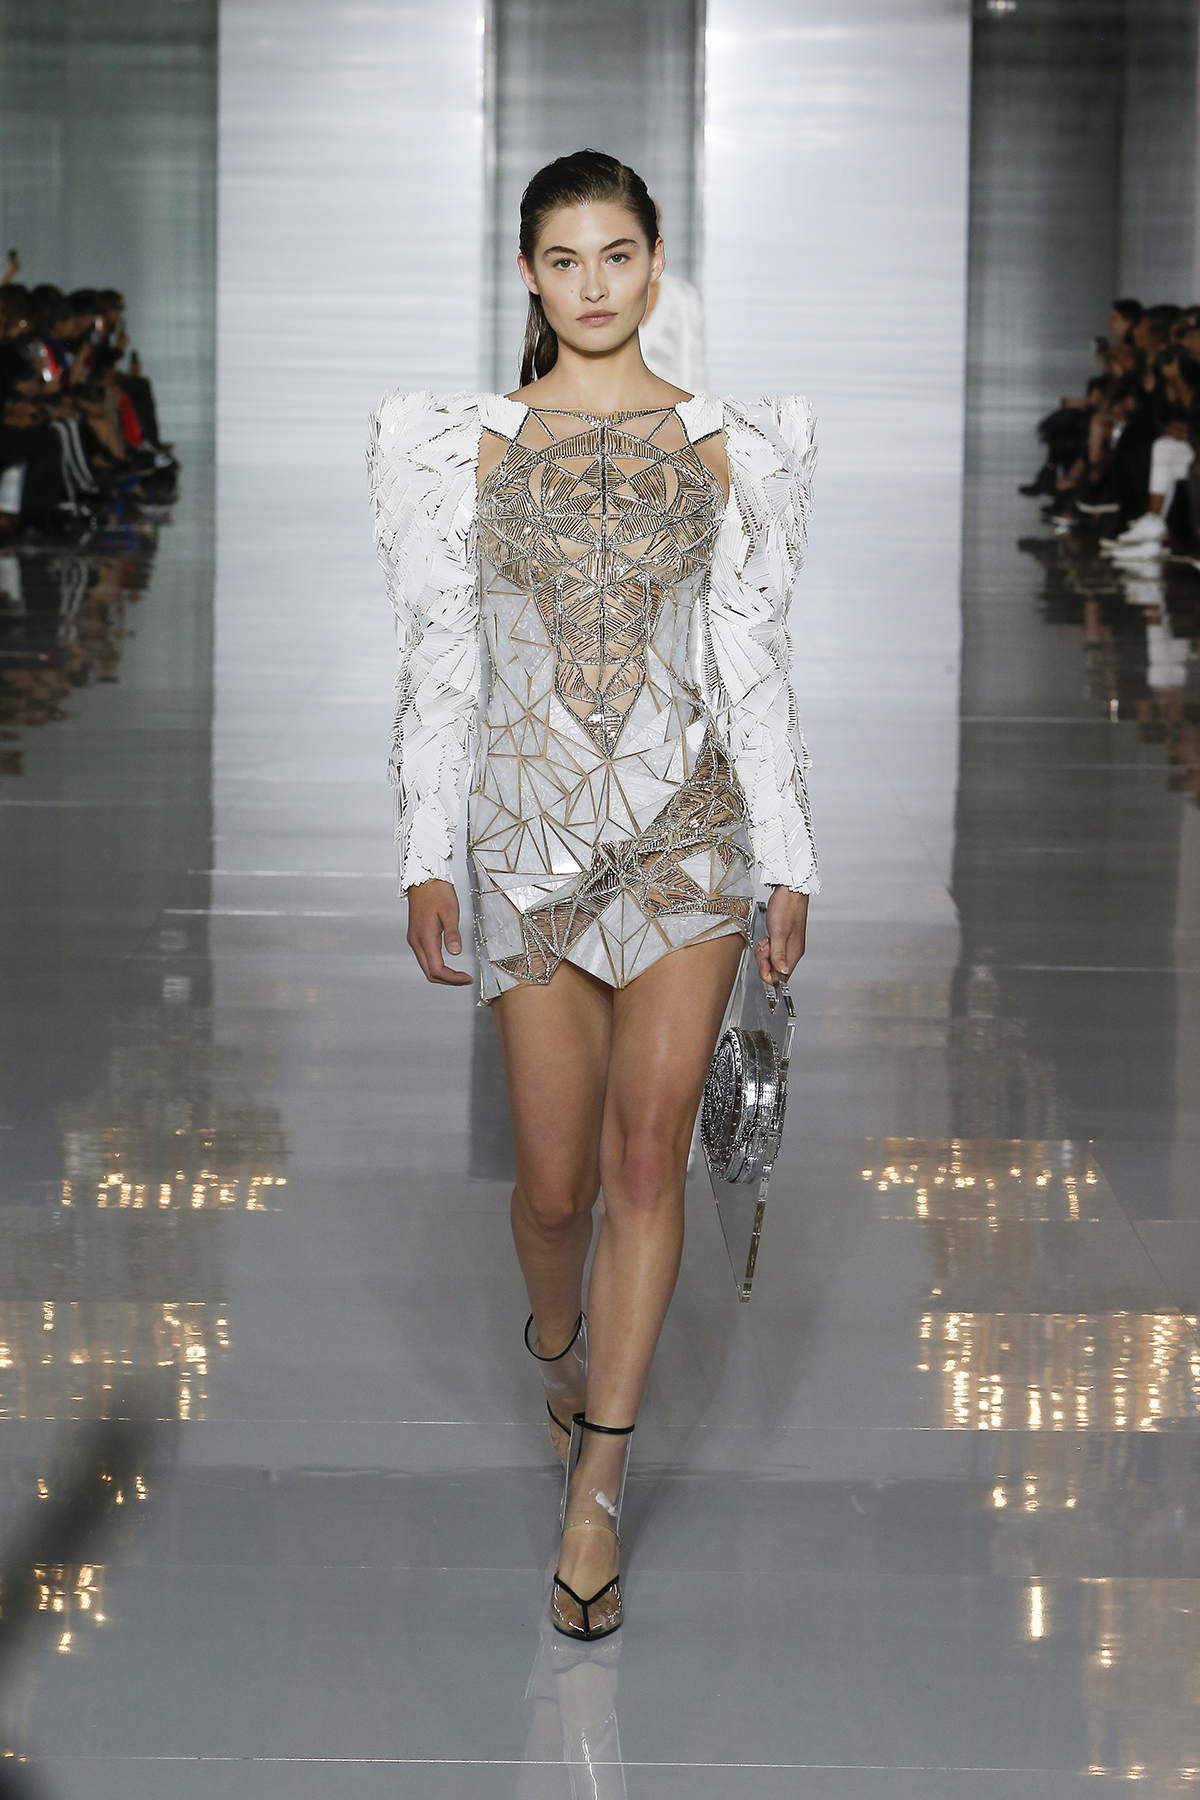 Model on a Balmain catwalk wearing couture dress